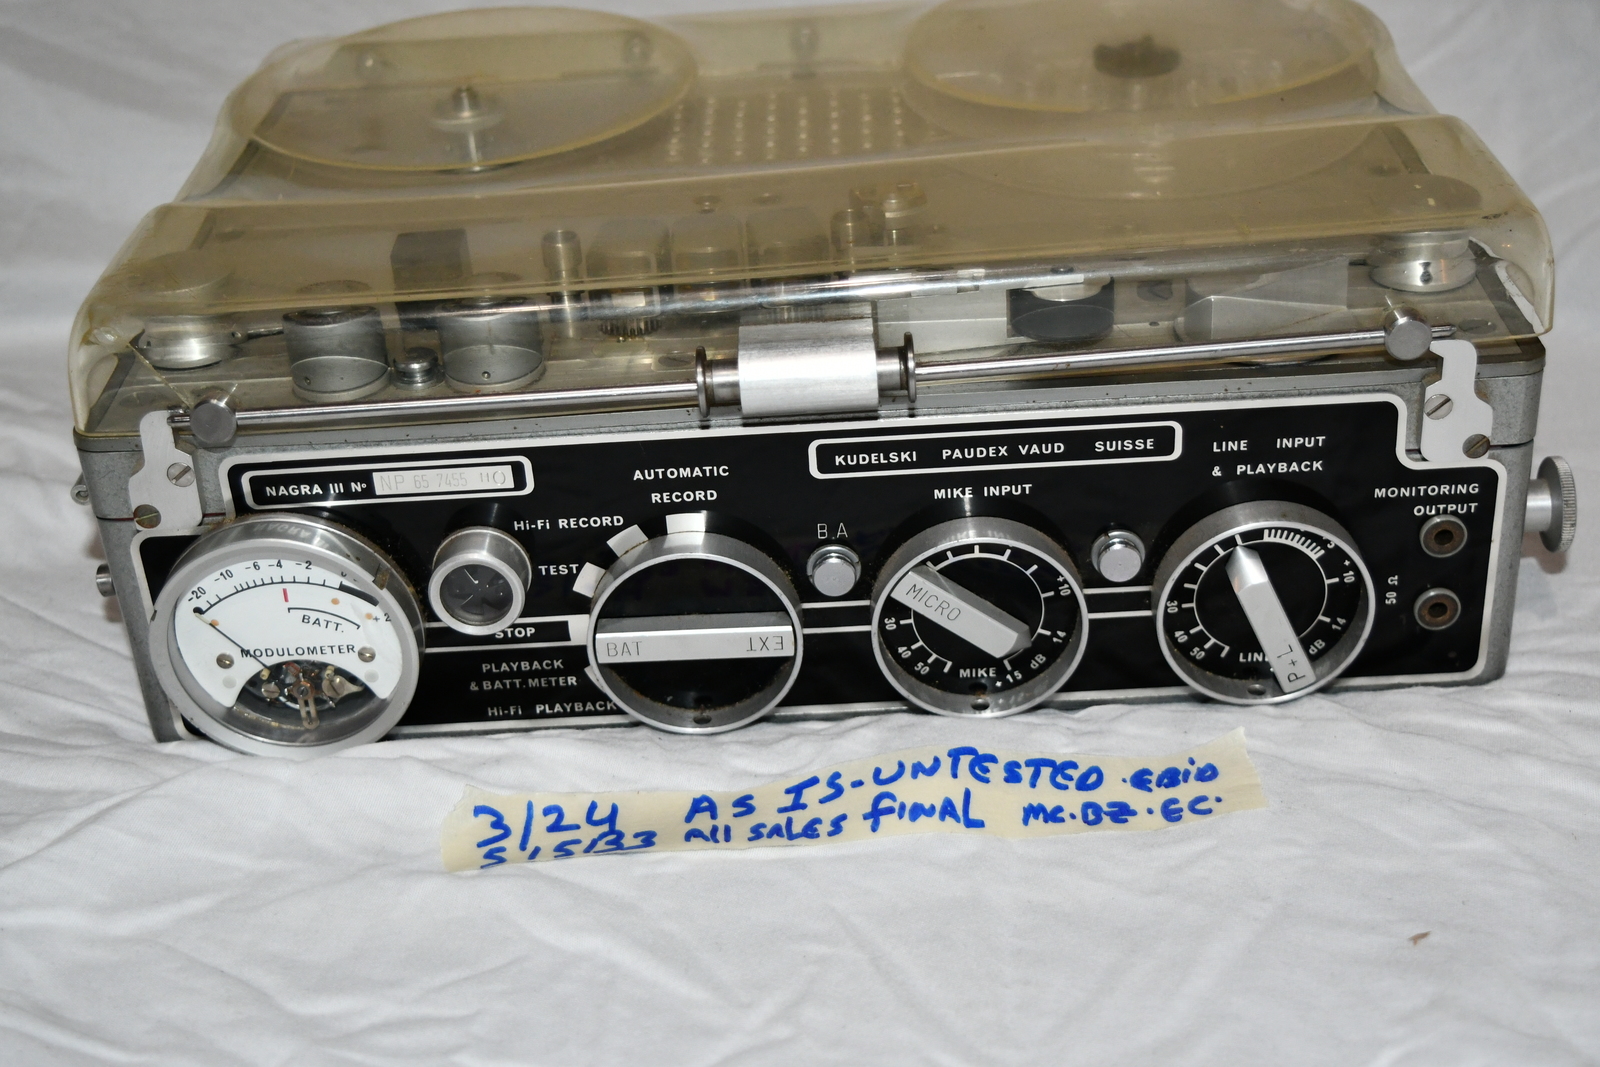 Used Nagra III Tape recorders for Sale